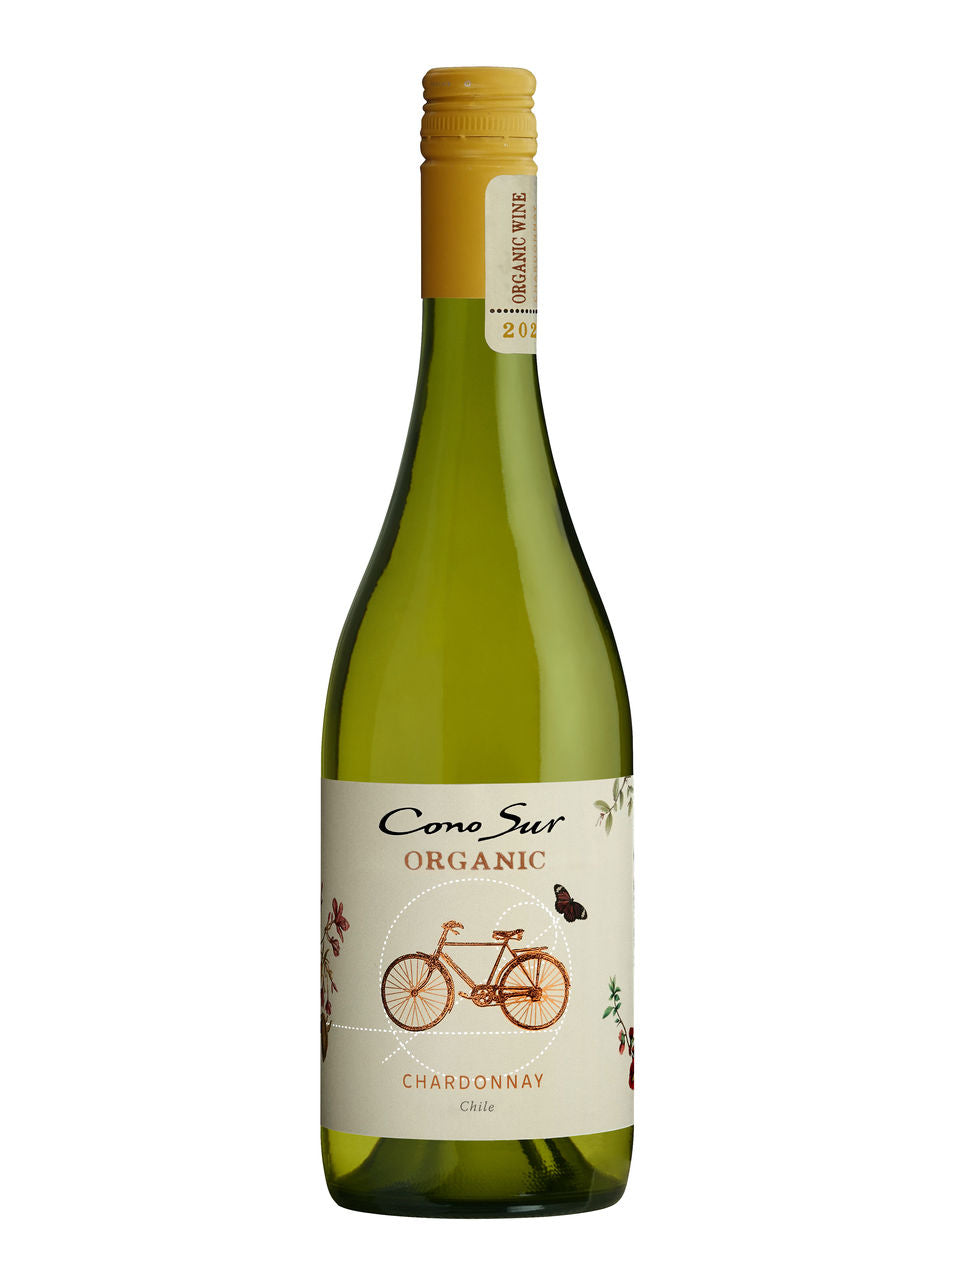 Cono Sur Chardonnay Organic 750 mL bottle